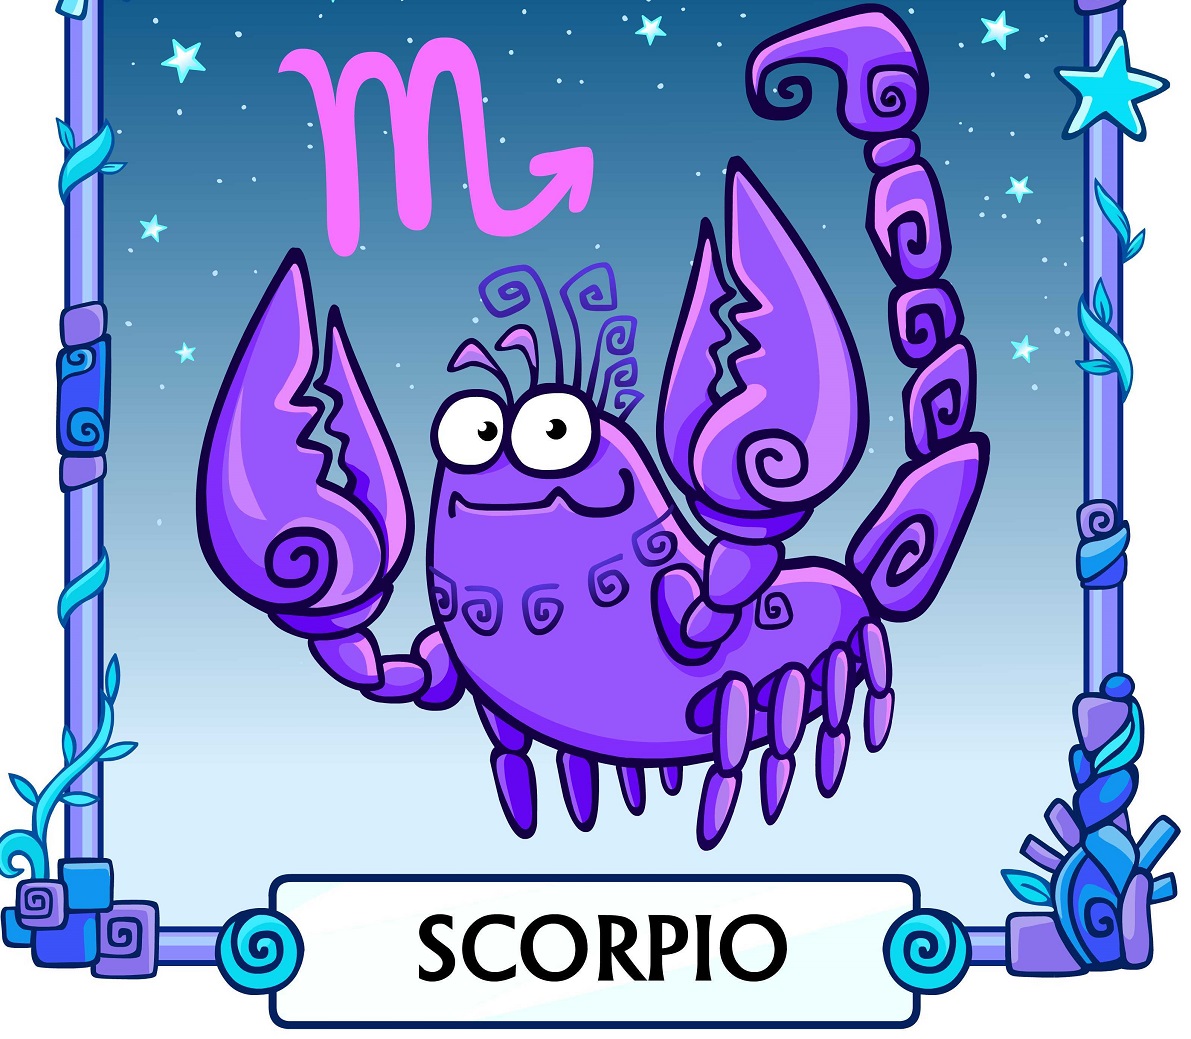 Horoscop săptămânal 12-18 februarie 2018 Scorpion - Oana Hanganu